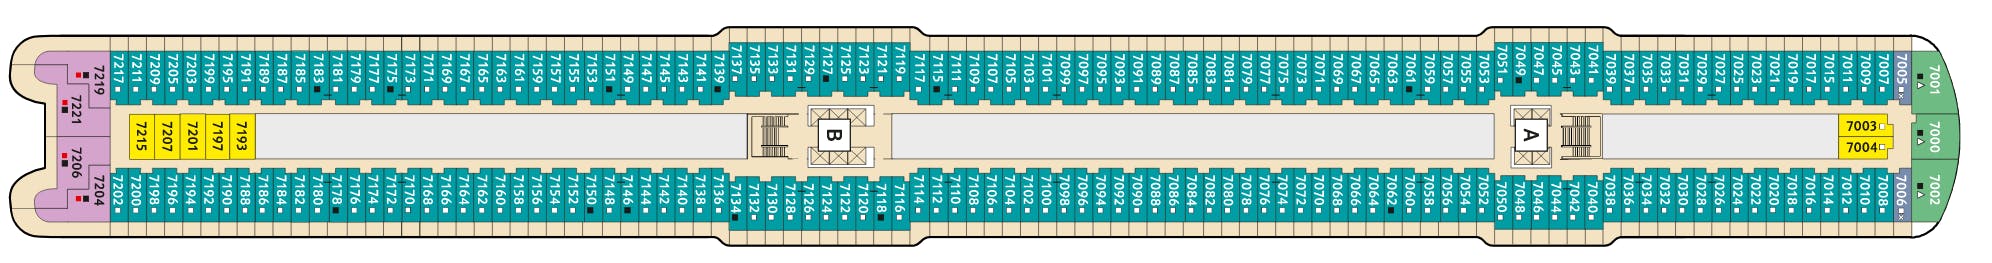 Mein Schiff 7 - TUI Cruises - Deck 7 (Hanse)